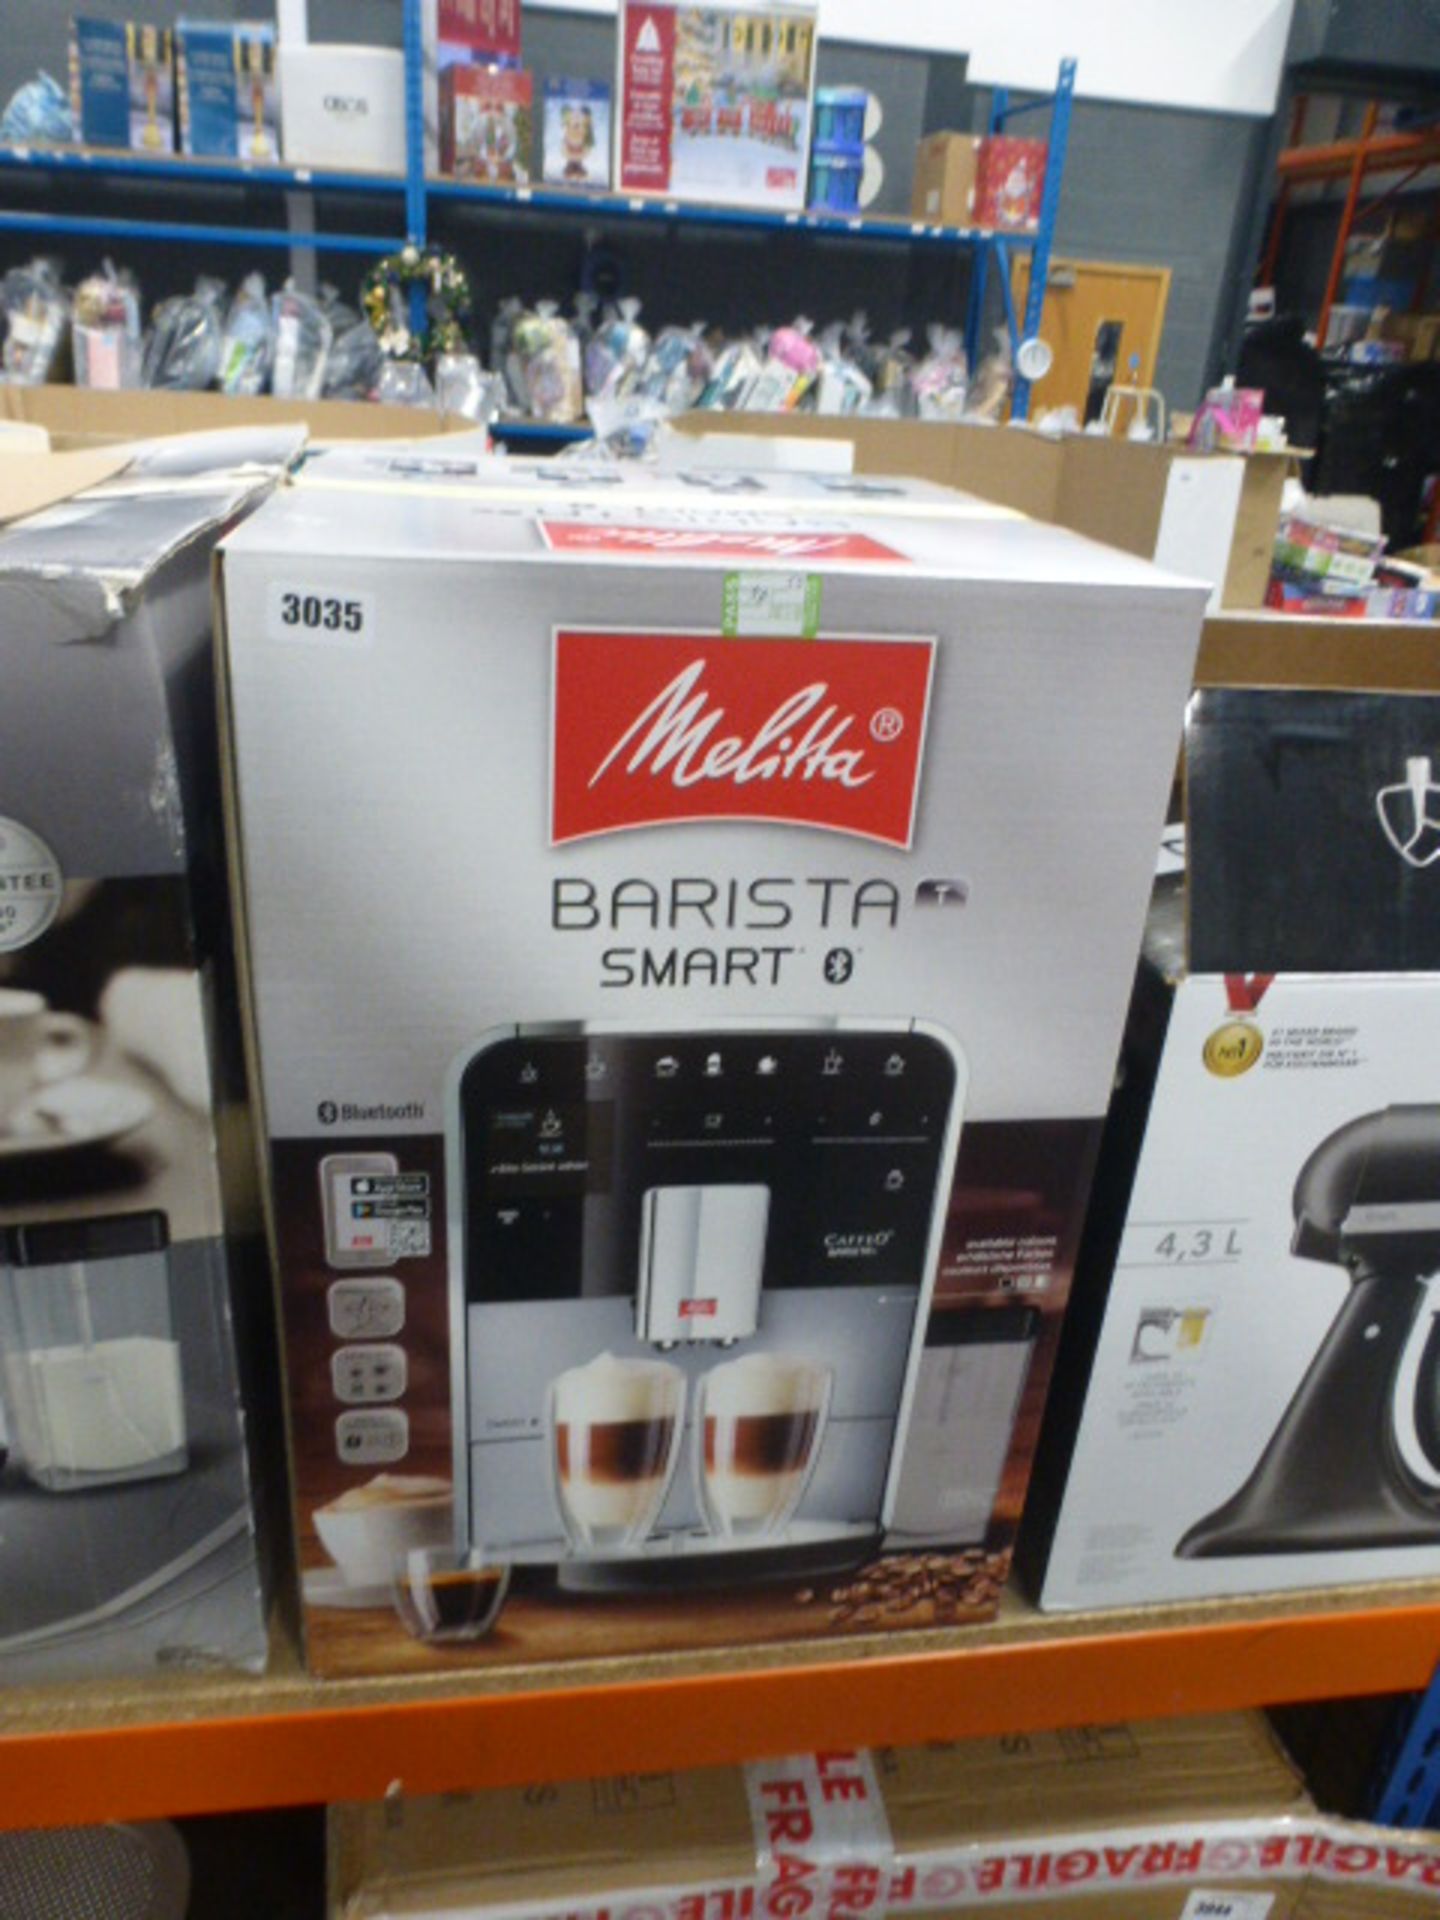 (55) Miletta Barista Smart coffee machine